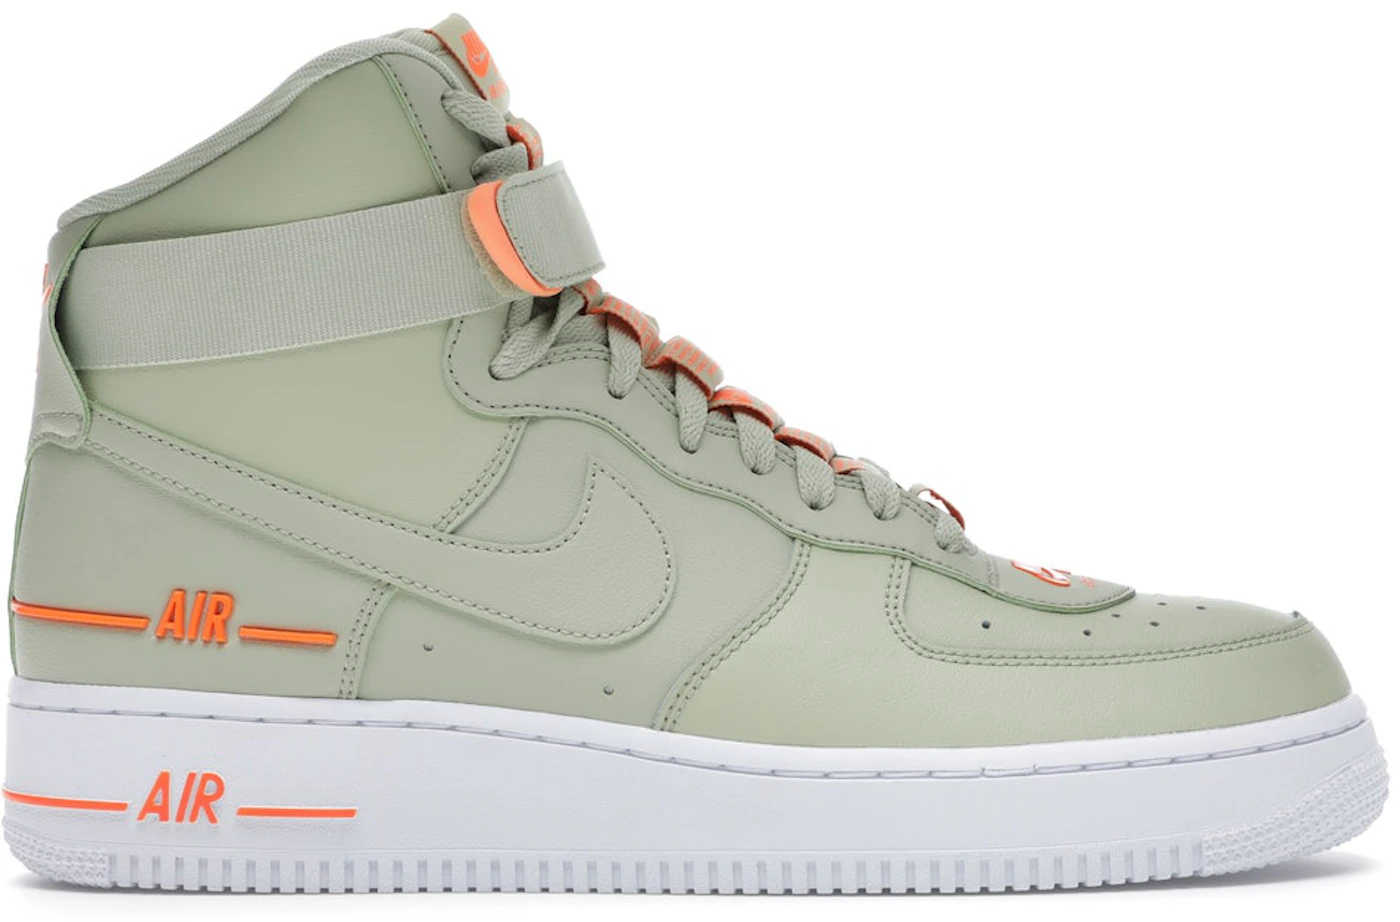 Nike Air Force 1 High Lv8 3 Shoes Orange